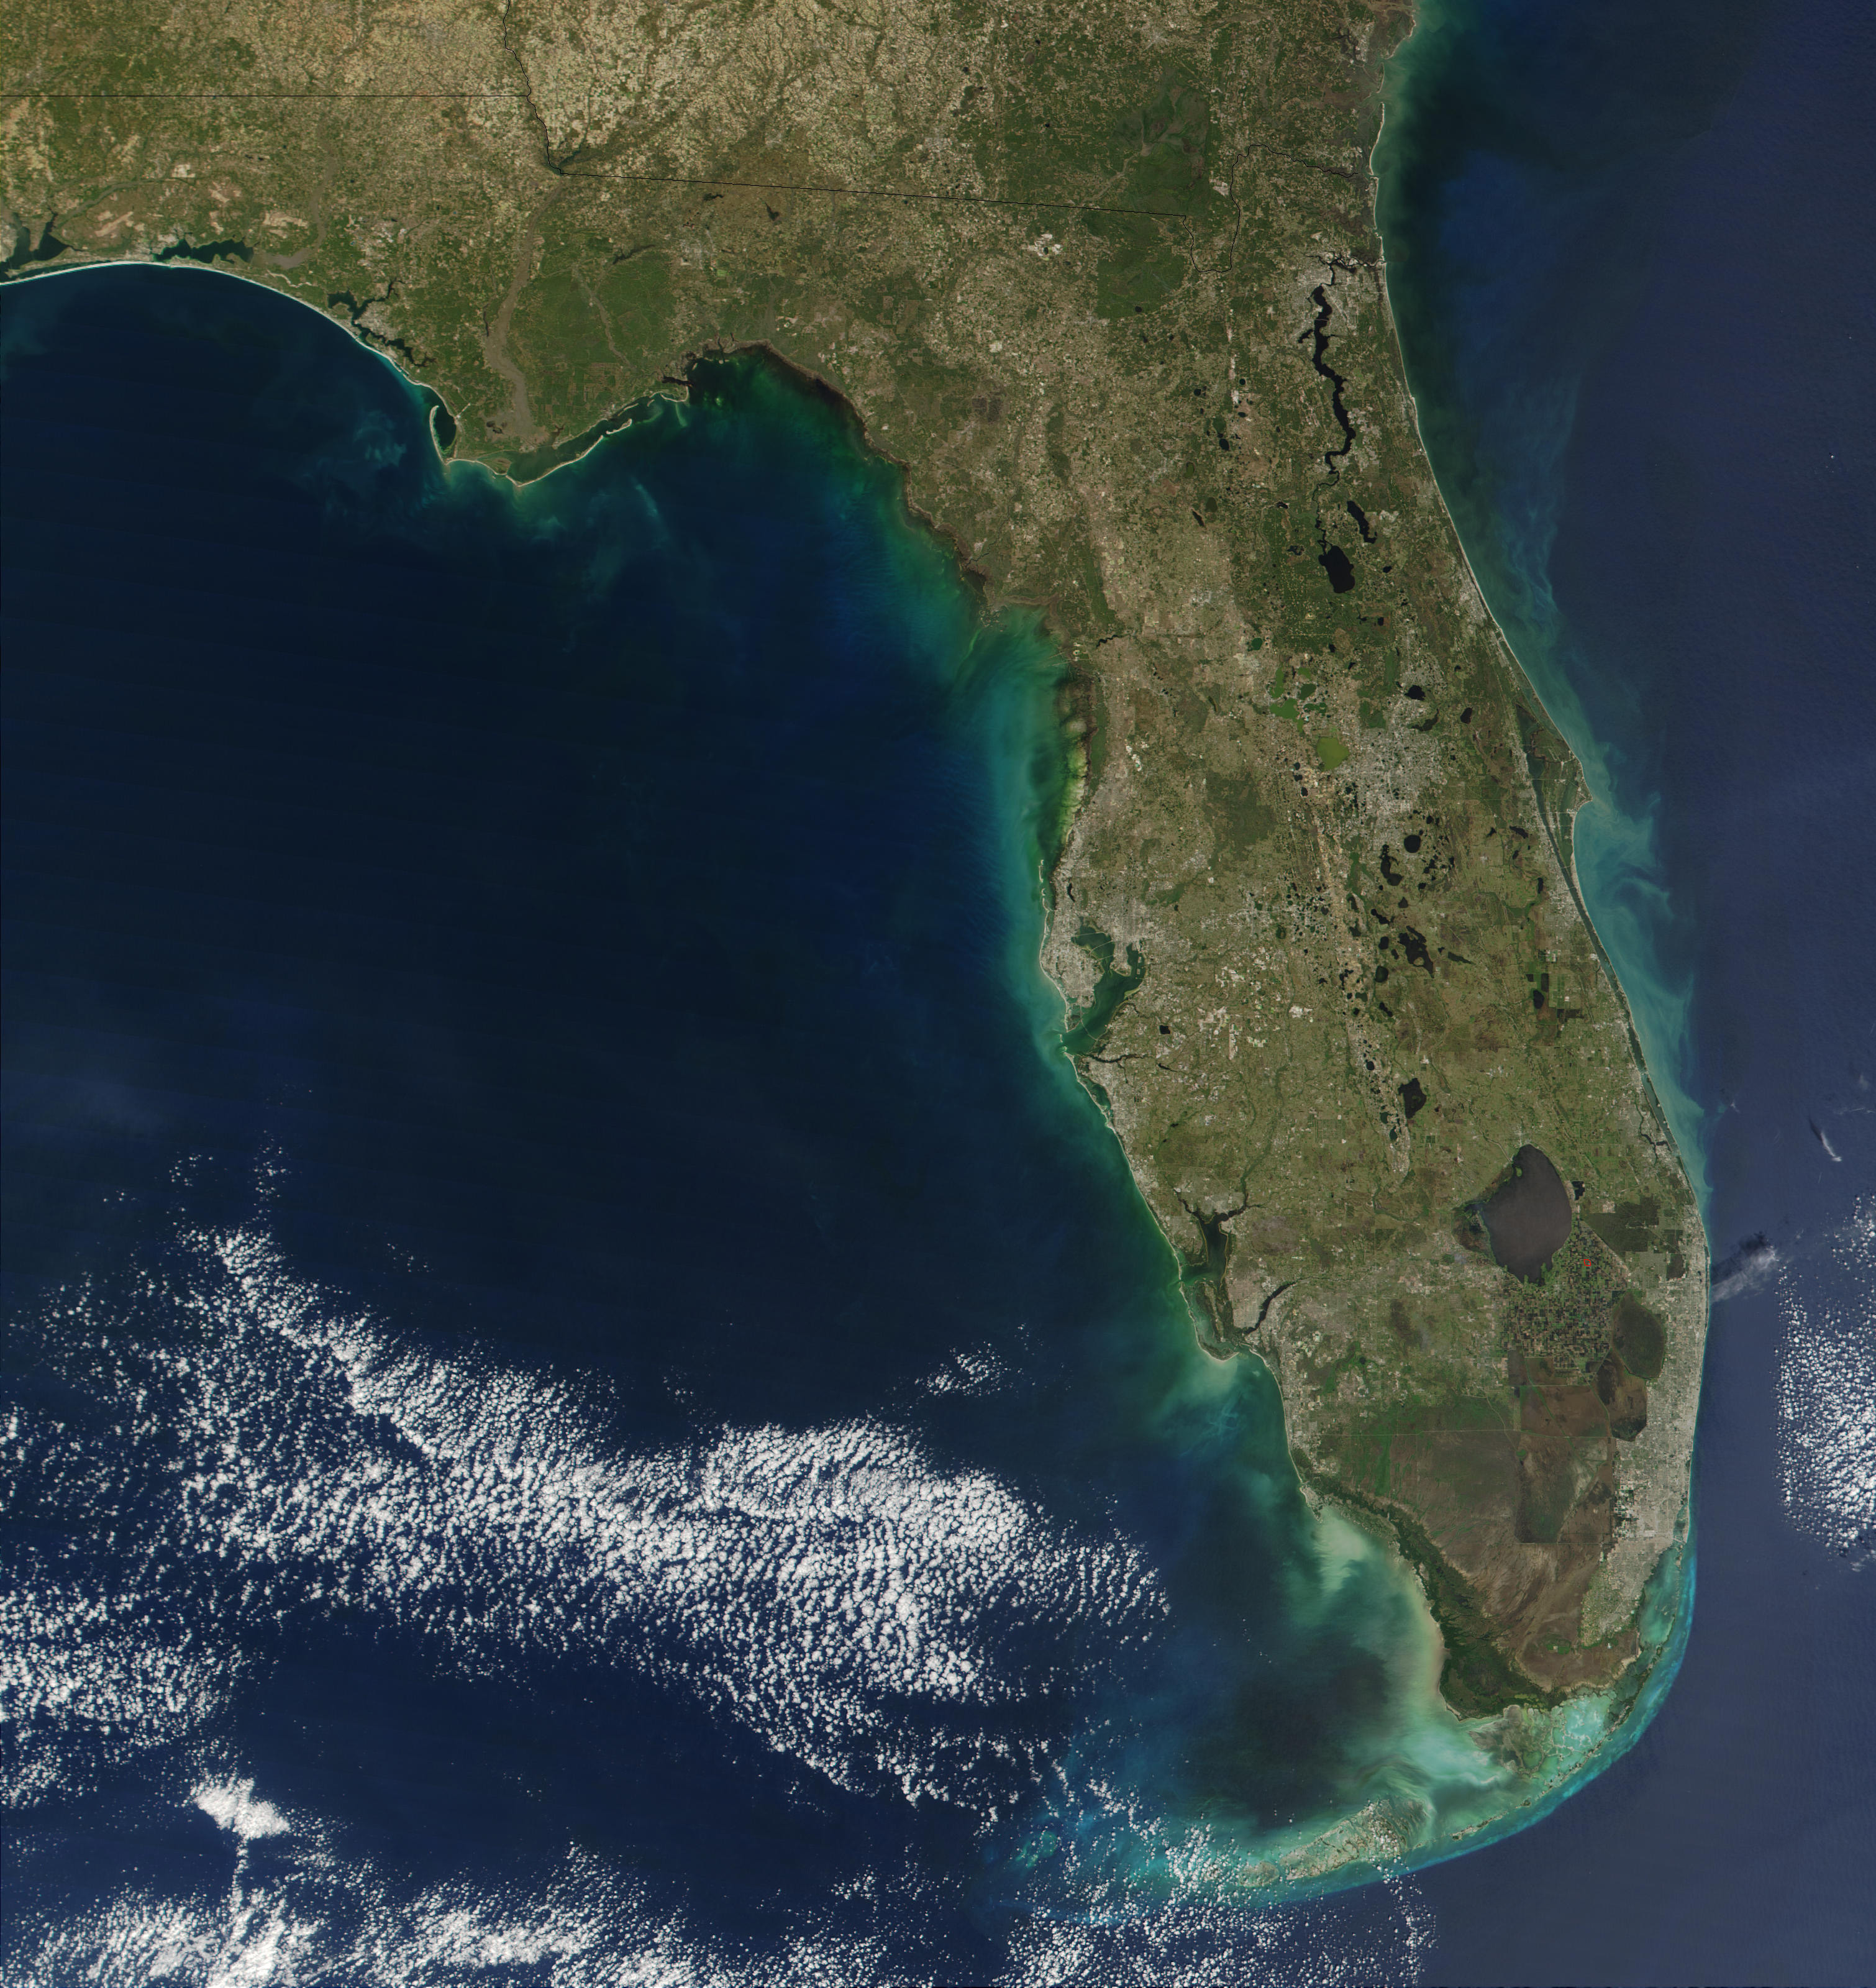 3 залива тихого океана. Мексиканский залив во Флориде. Техас мексиканский залив. Индийский океан мексиканский залив. Мексиканский залив фото из космоса.